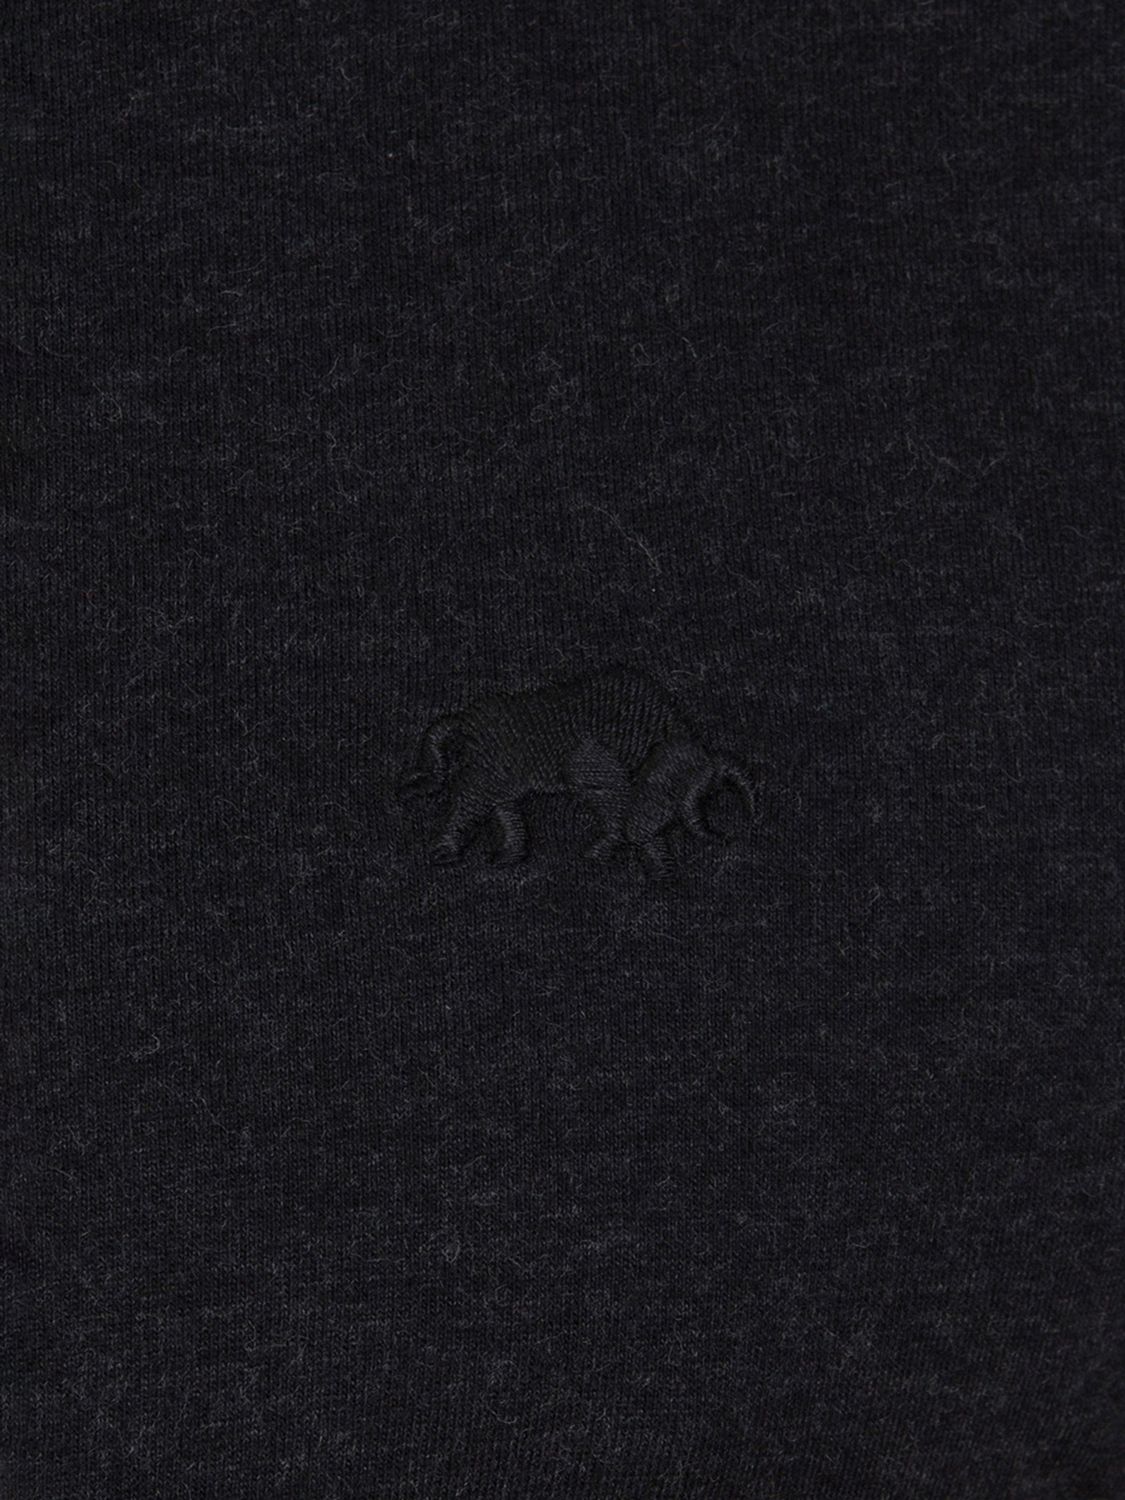 Raging Bull Classic Organic Cotton T-Shirt, Black, S